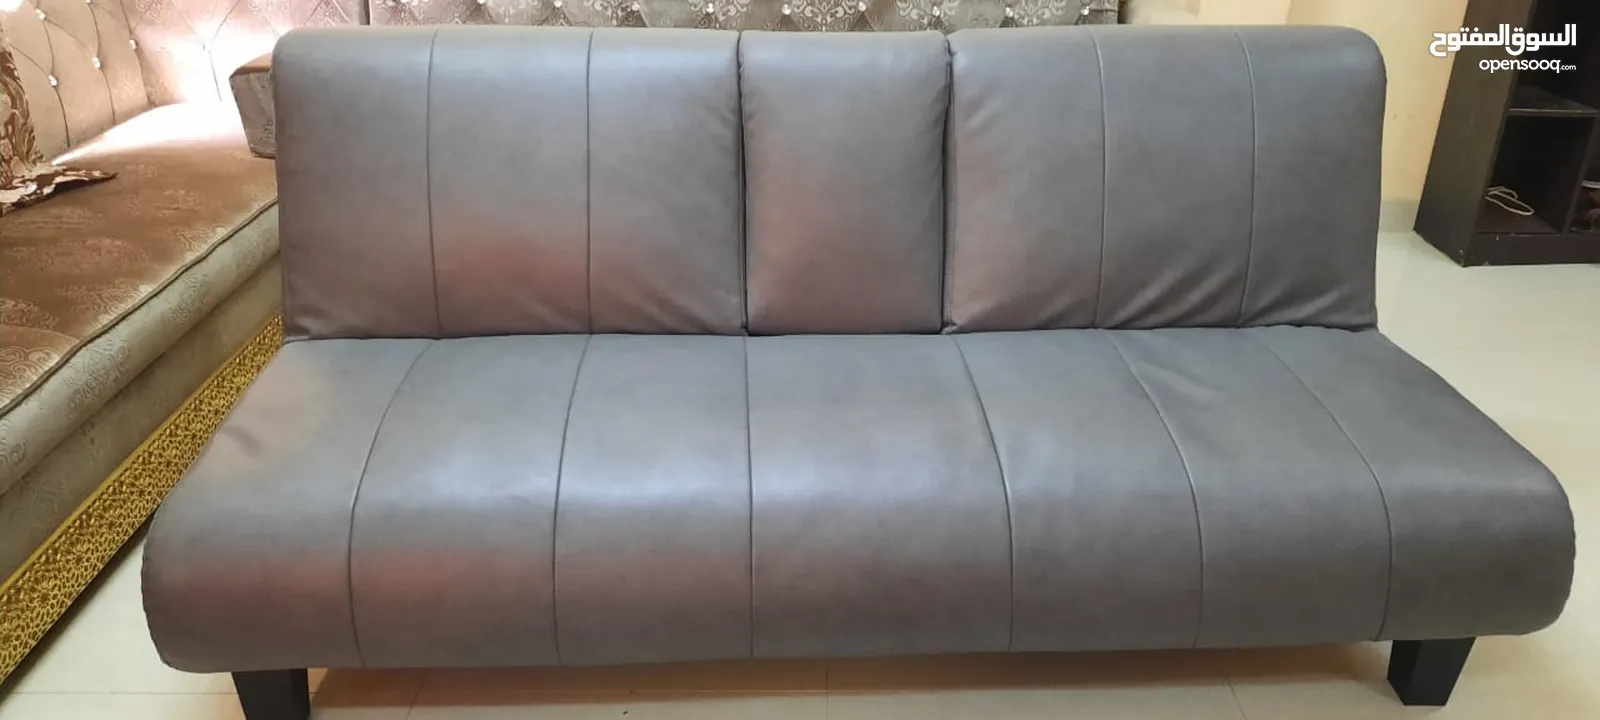 Pan Emirates bedcom sofa